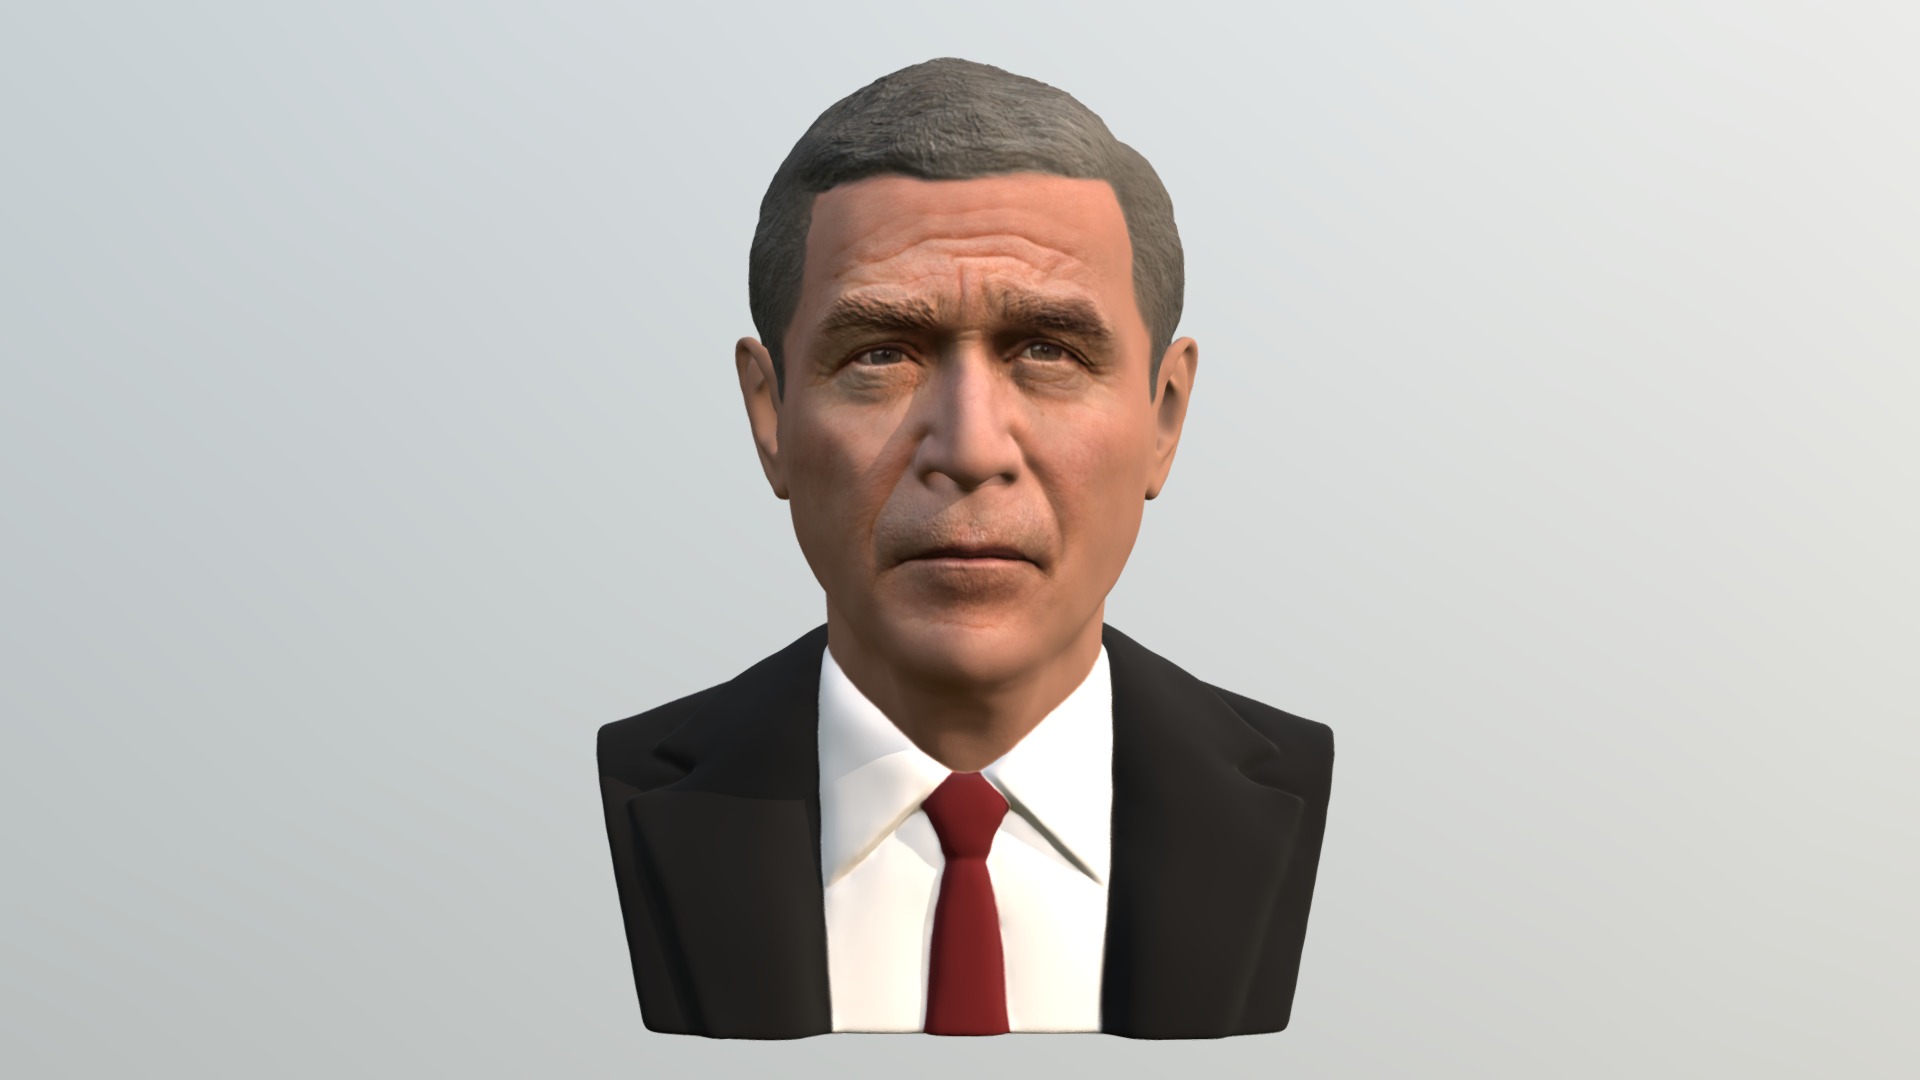 3D model George Bush bust for full color 3D printing - This is a 3D model of the George Bush bust for full color 3D printing. The 3D model is about a man in a suit.